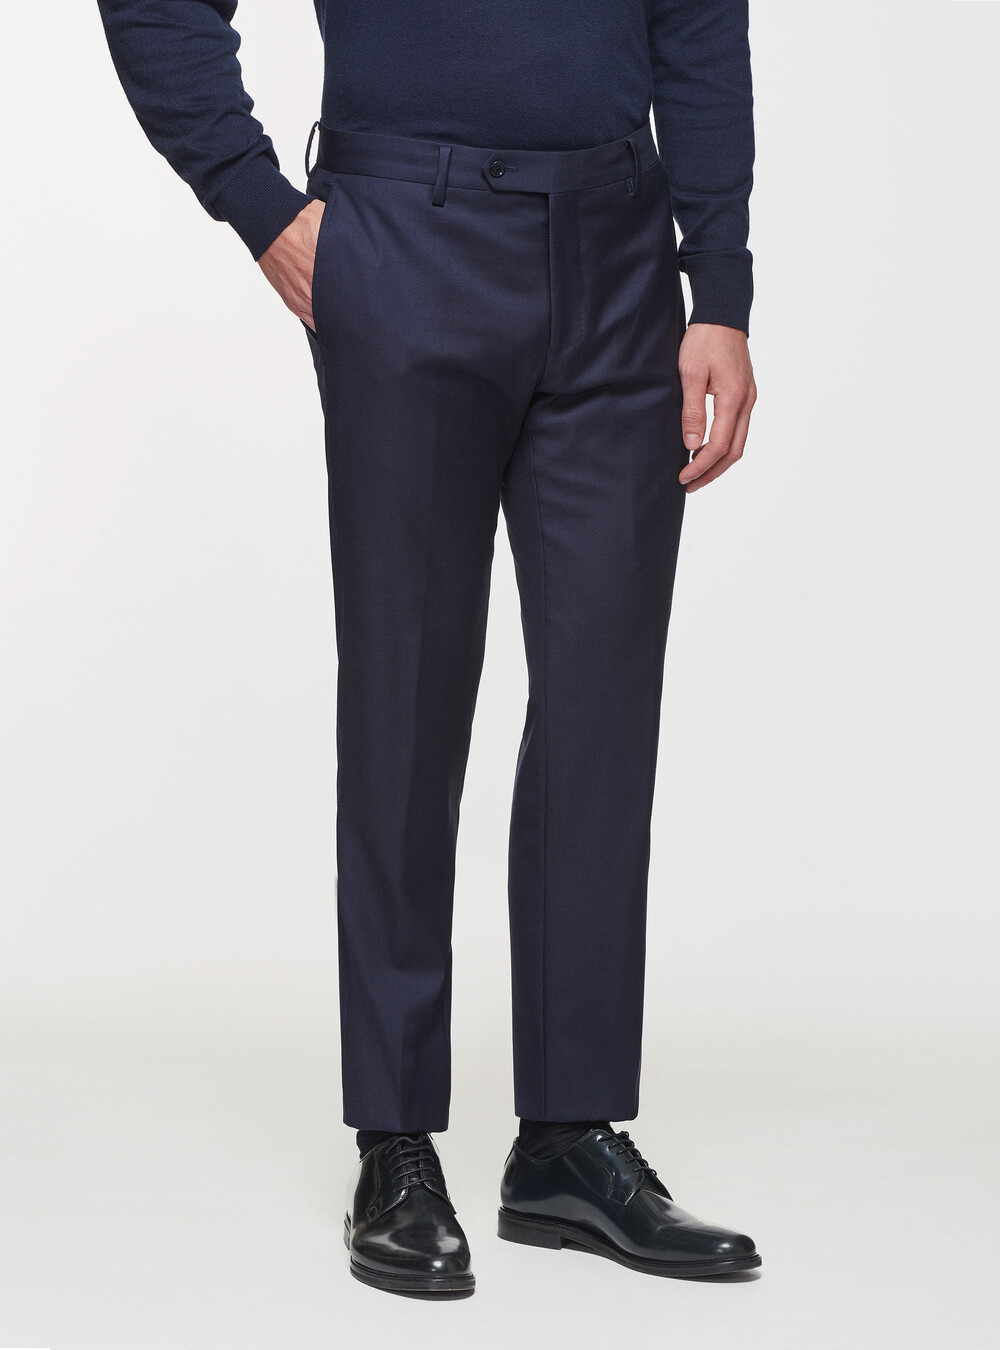 Trousers in pure 110's superfine wool | GutteridgeUS | Men's catalog ...